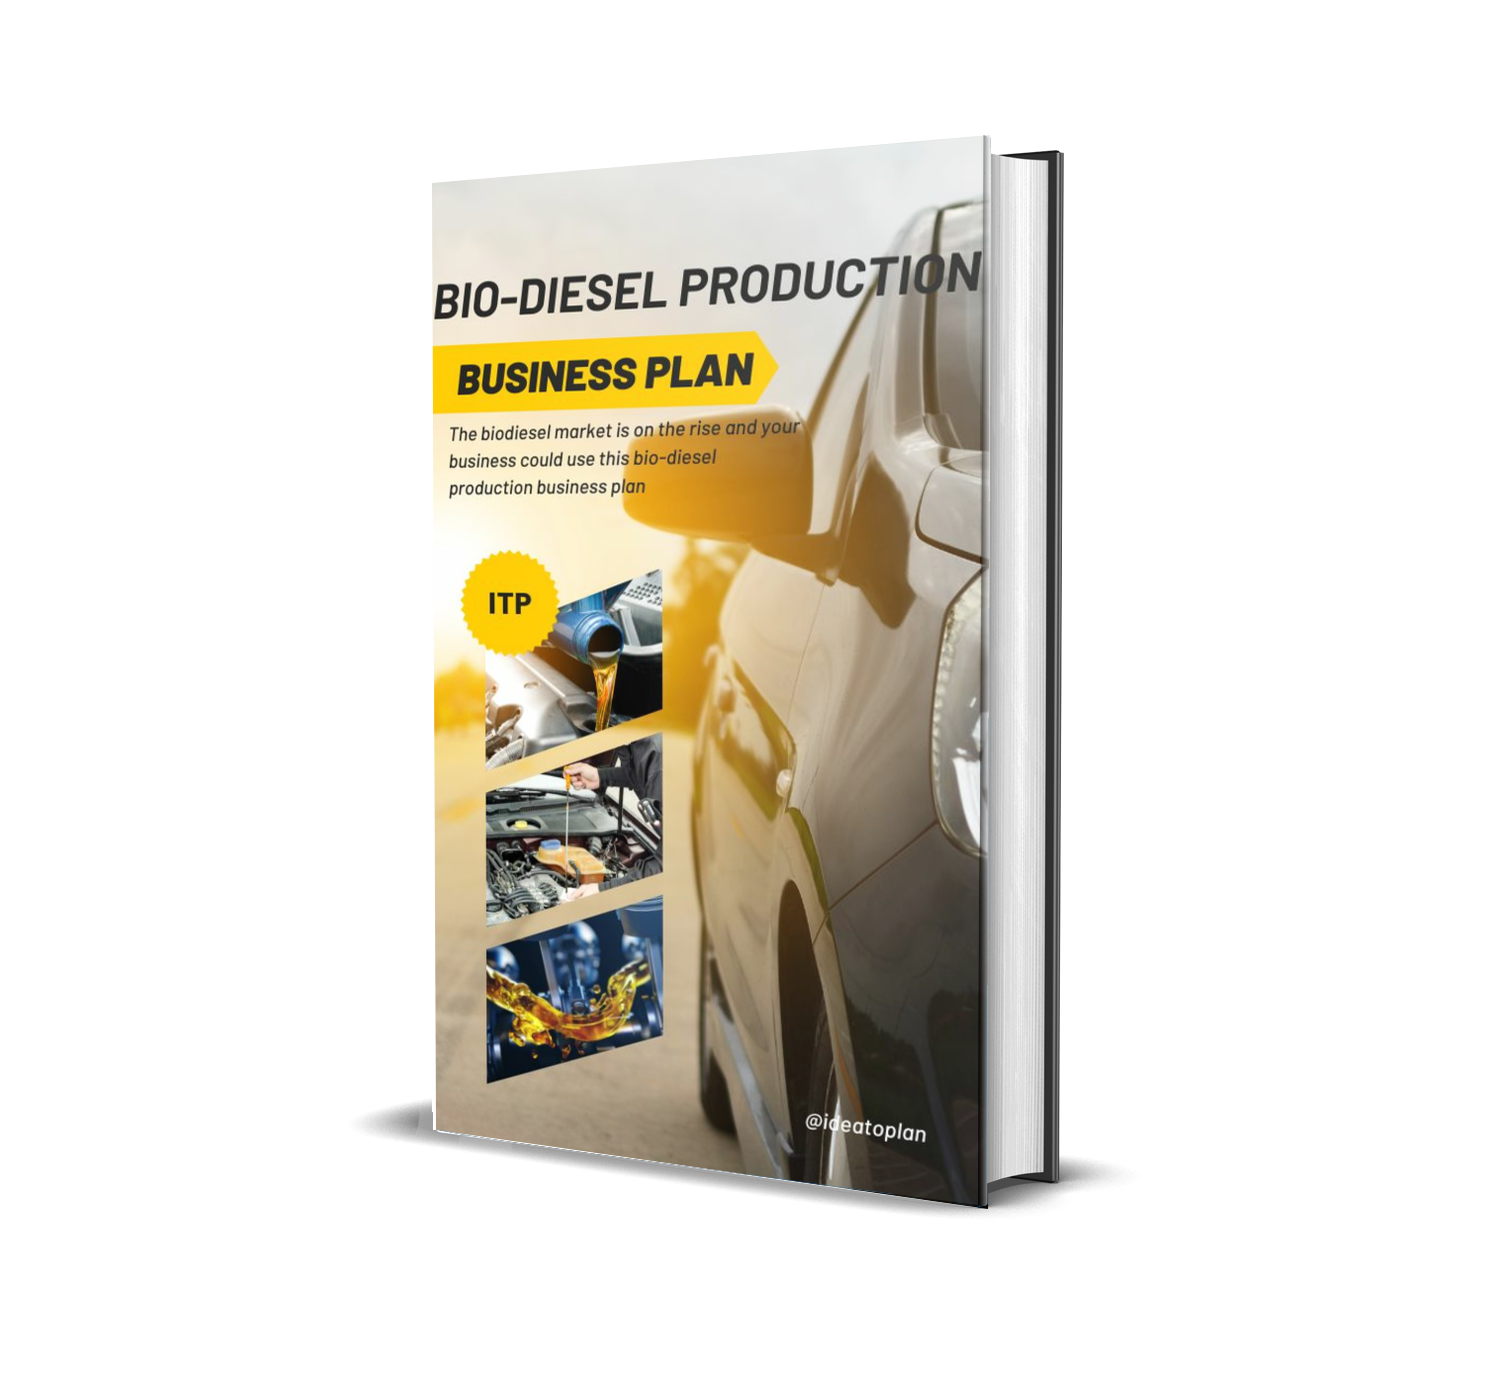 bio-diesel production business plan